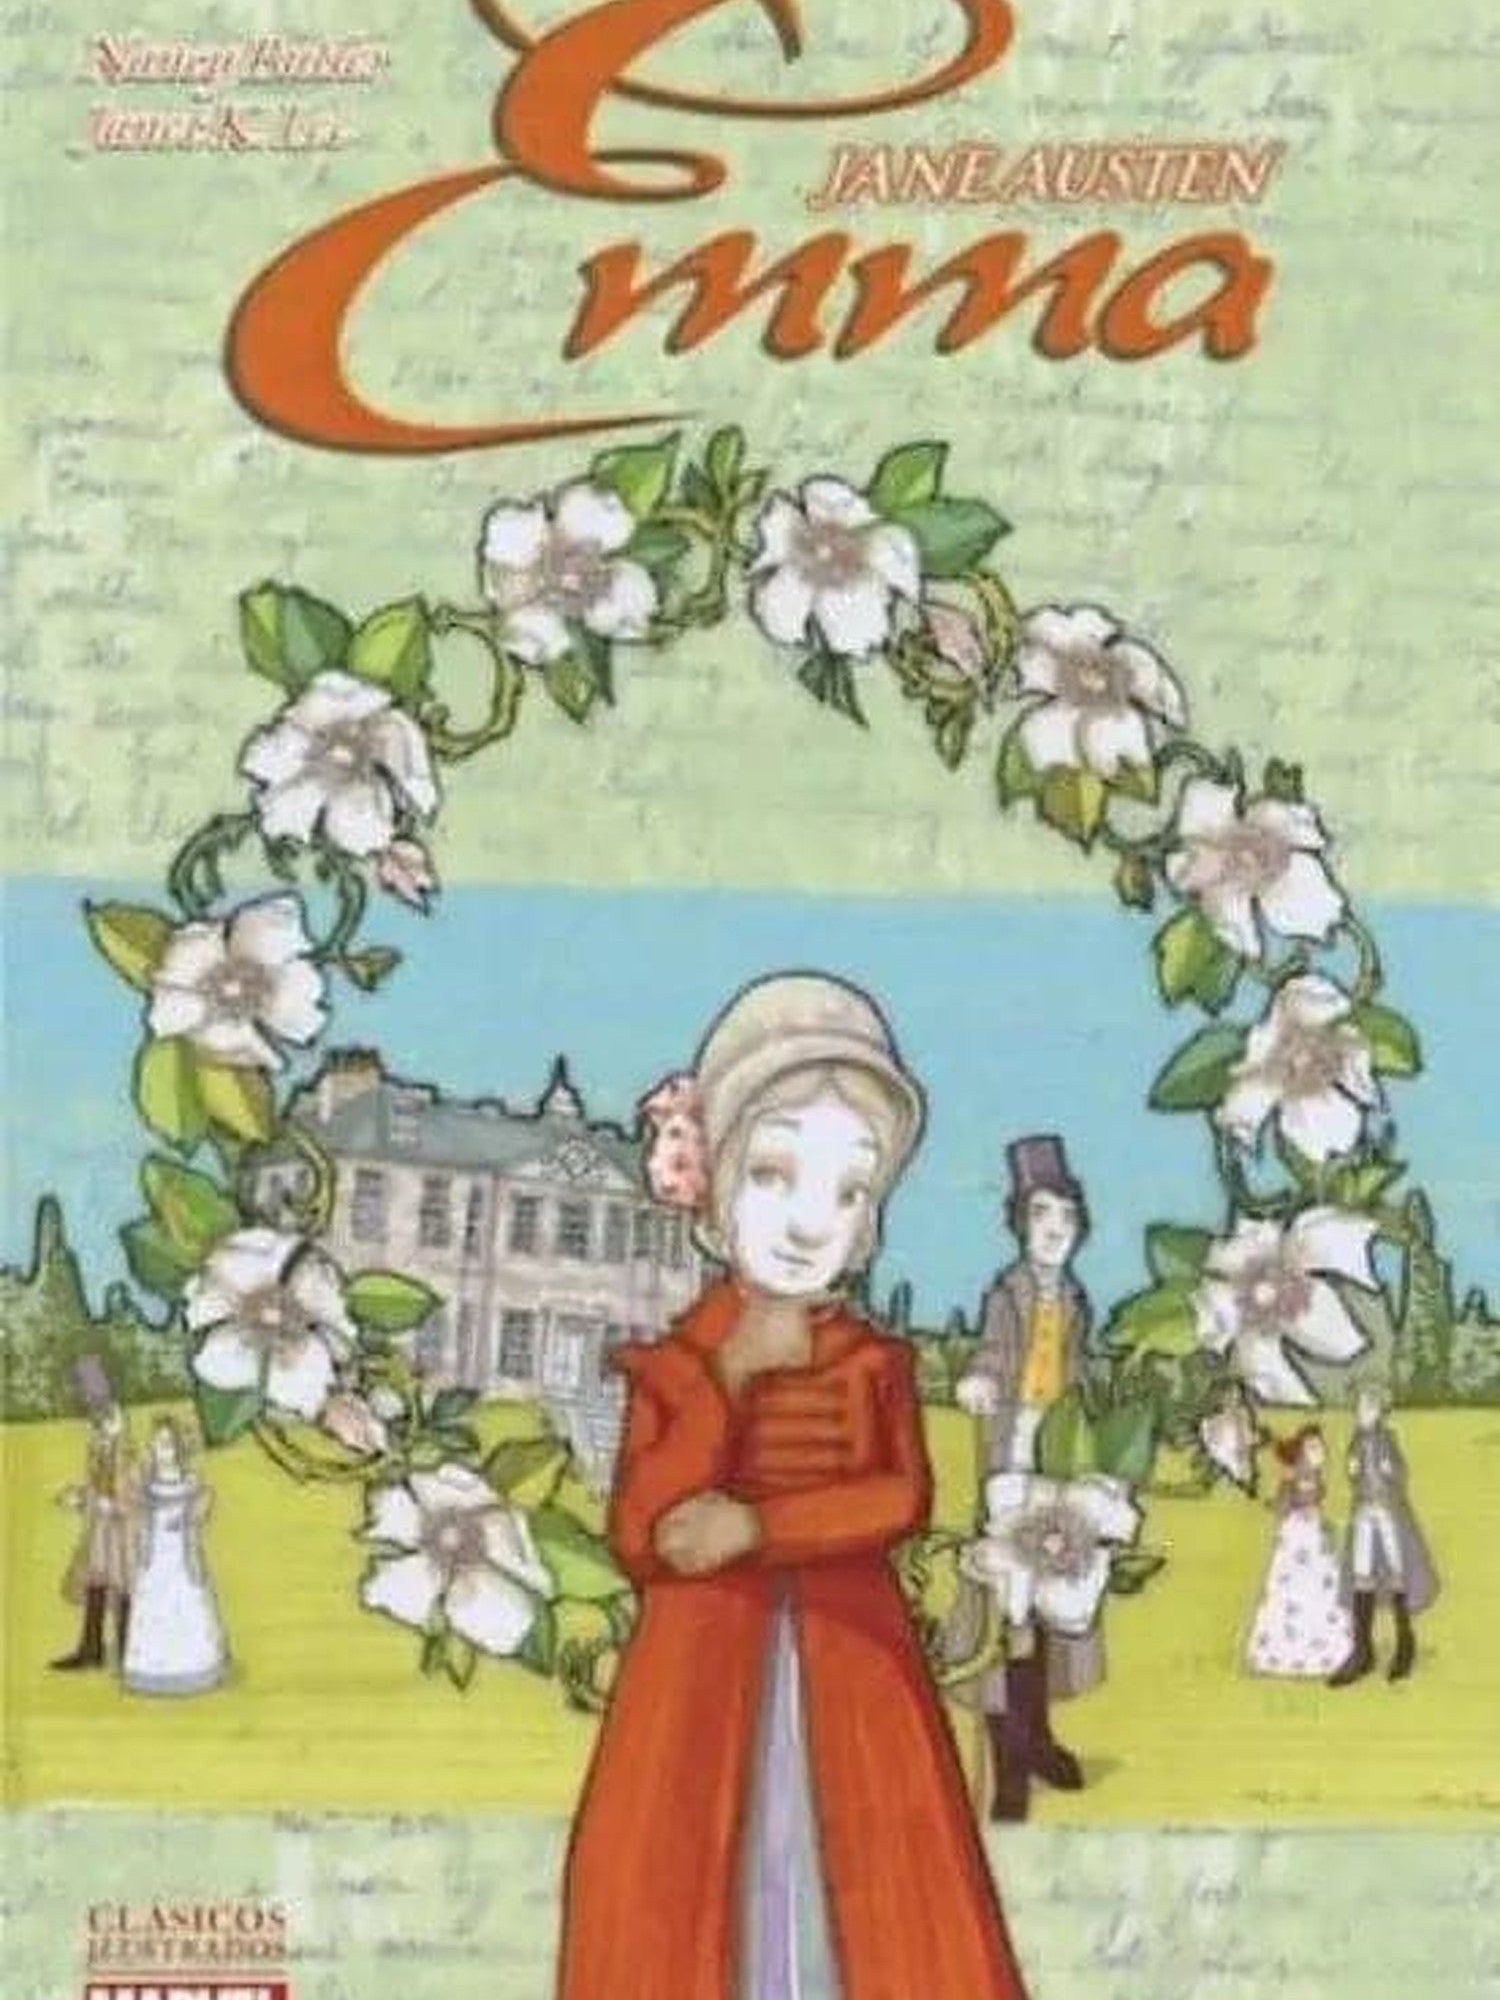 Emma - Jane Austen Panini España ENcuadrocomics